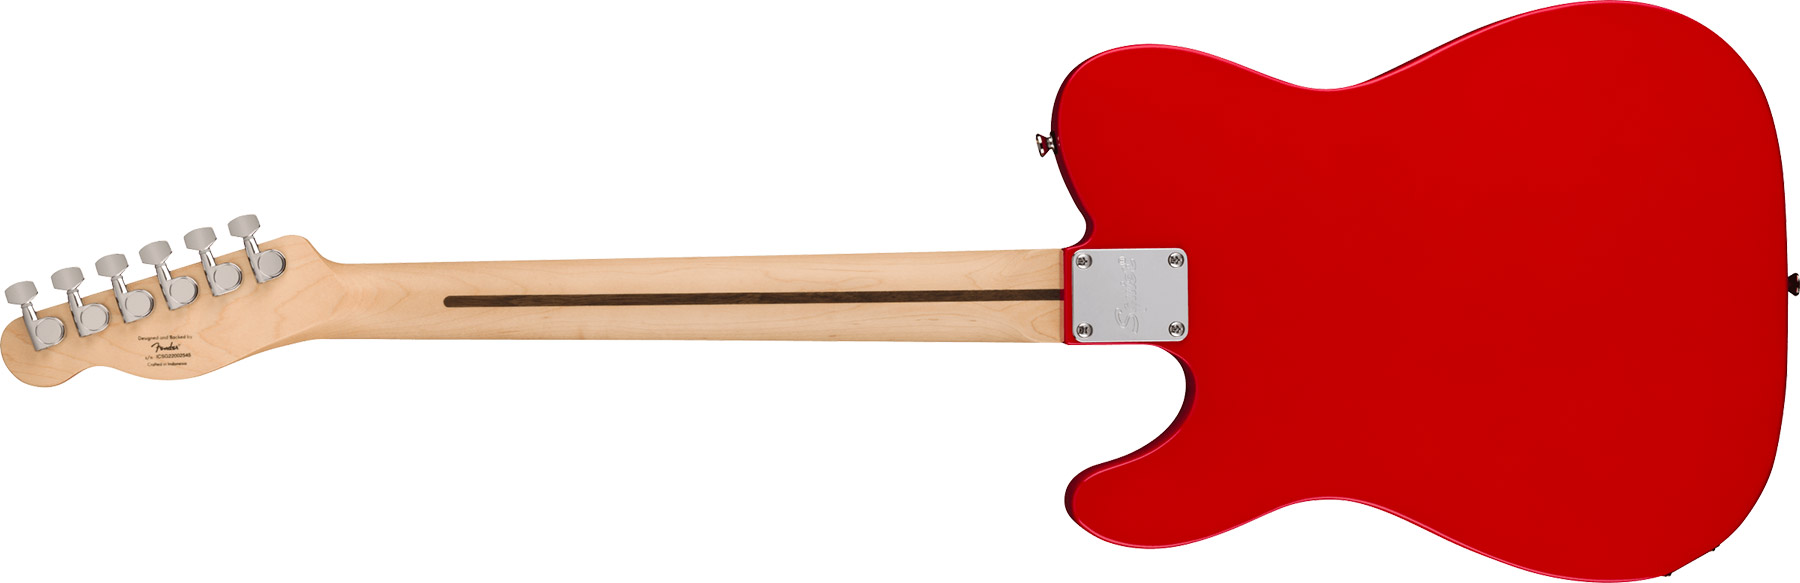 Squier Tele Sonic 2s Ht Lau - Torino Red - Guitarra eléctrica con forma de tel - Variation 1